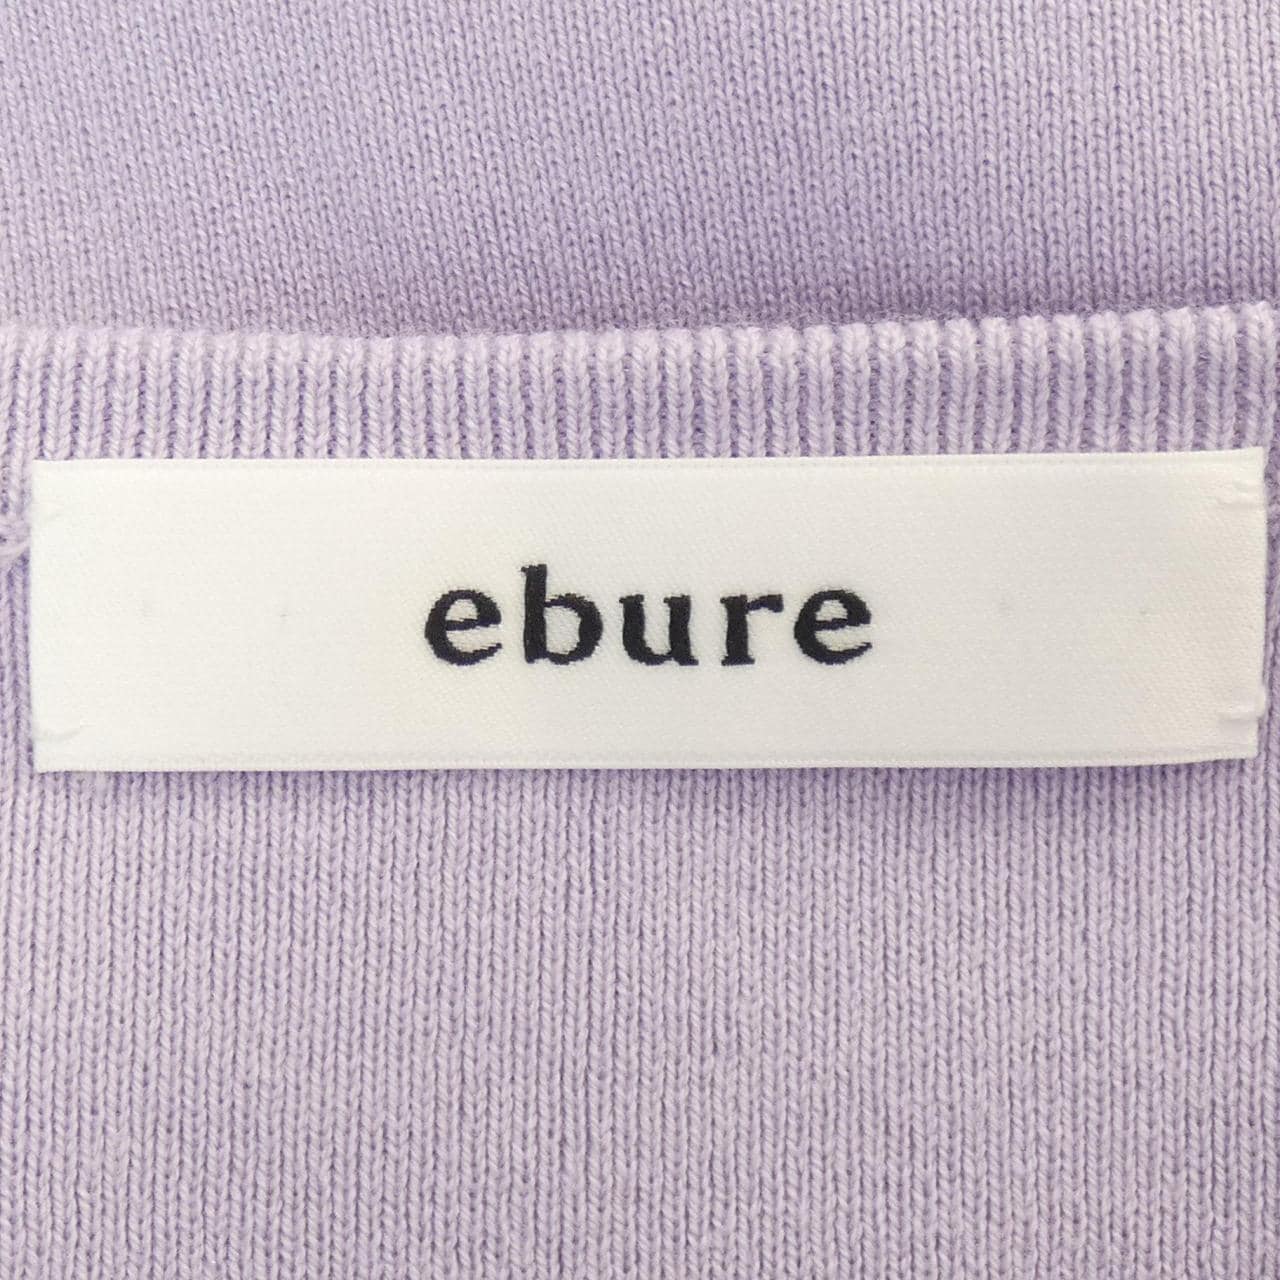 ebure ebure one piece